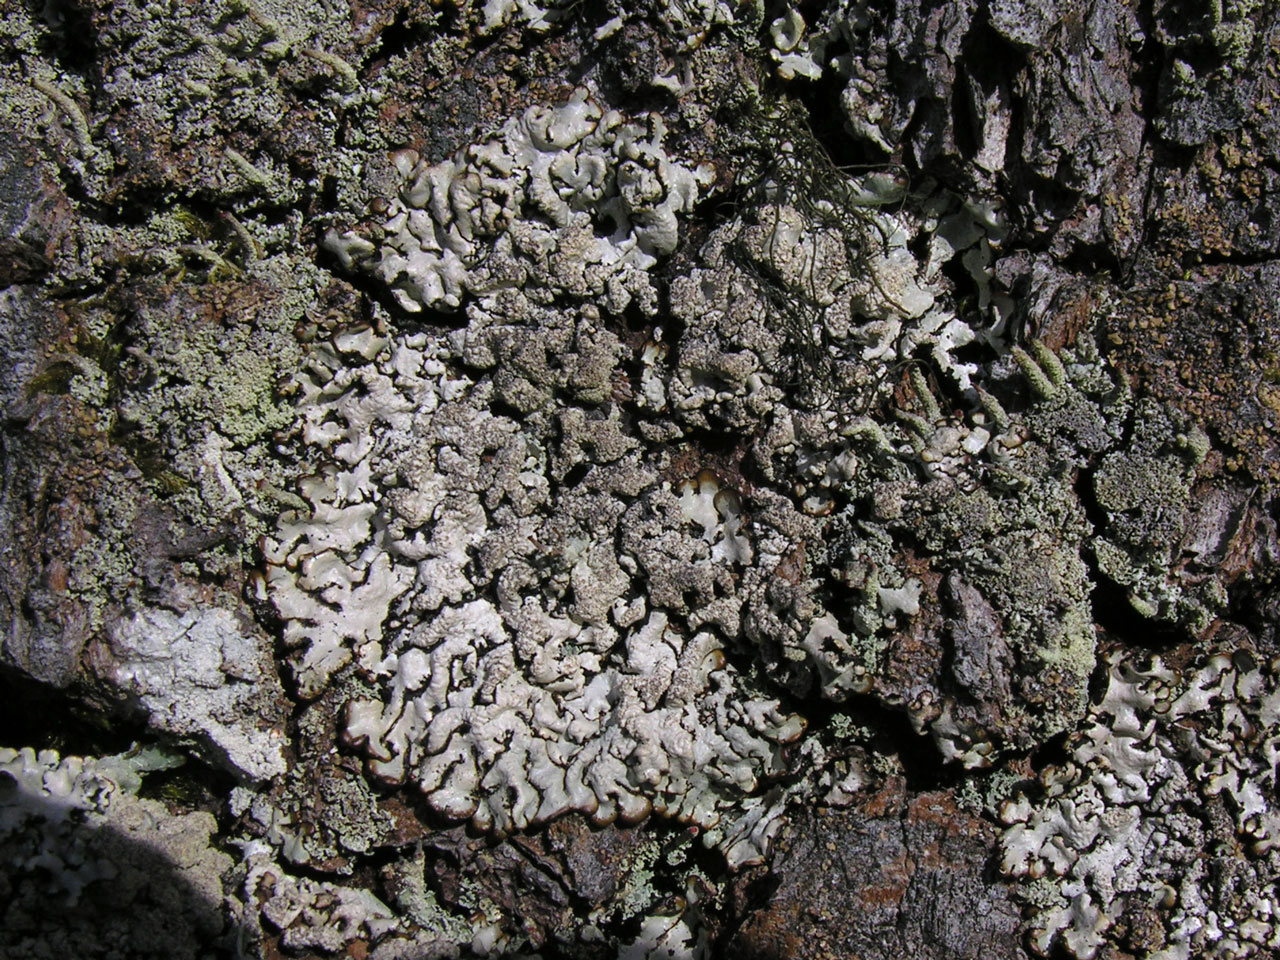 Hypogymnia farinacea, Alder, native pinewood, Glen Feshie, Speyside, East Inverness-shire